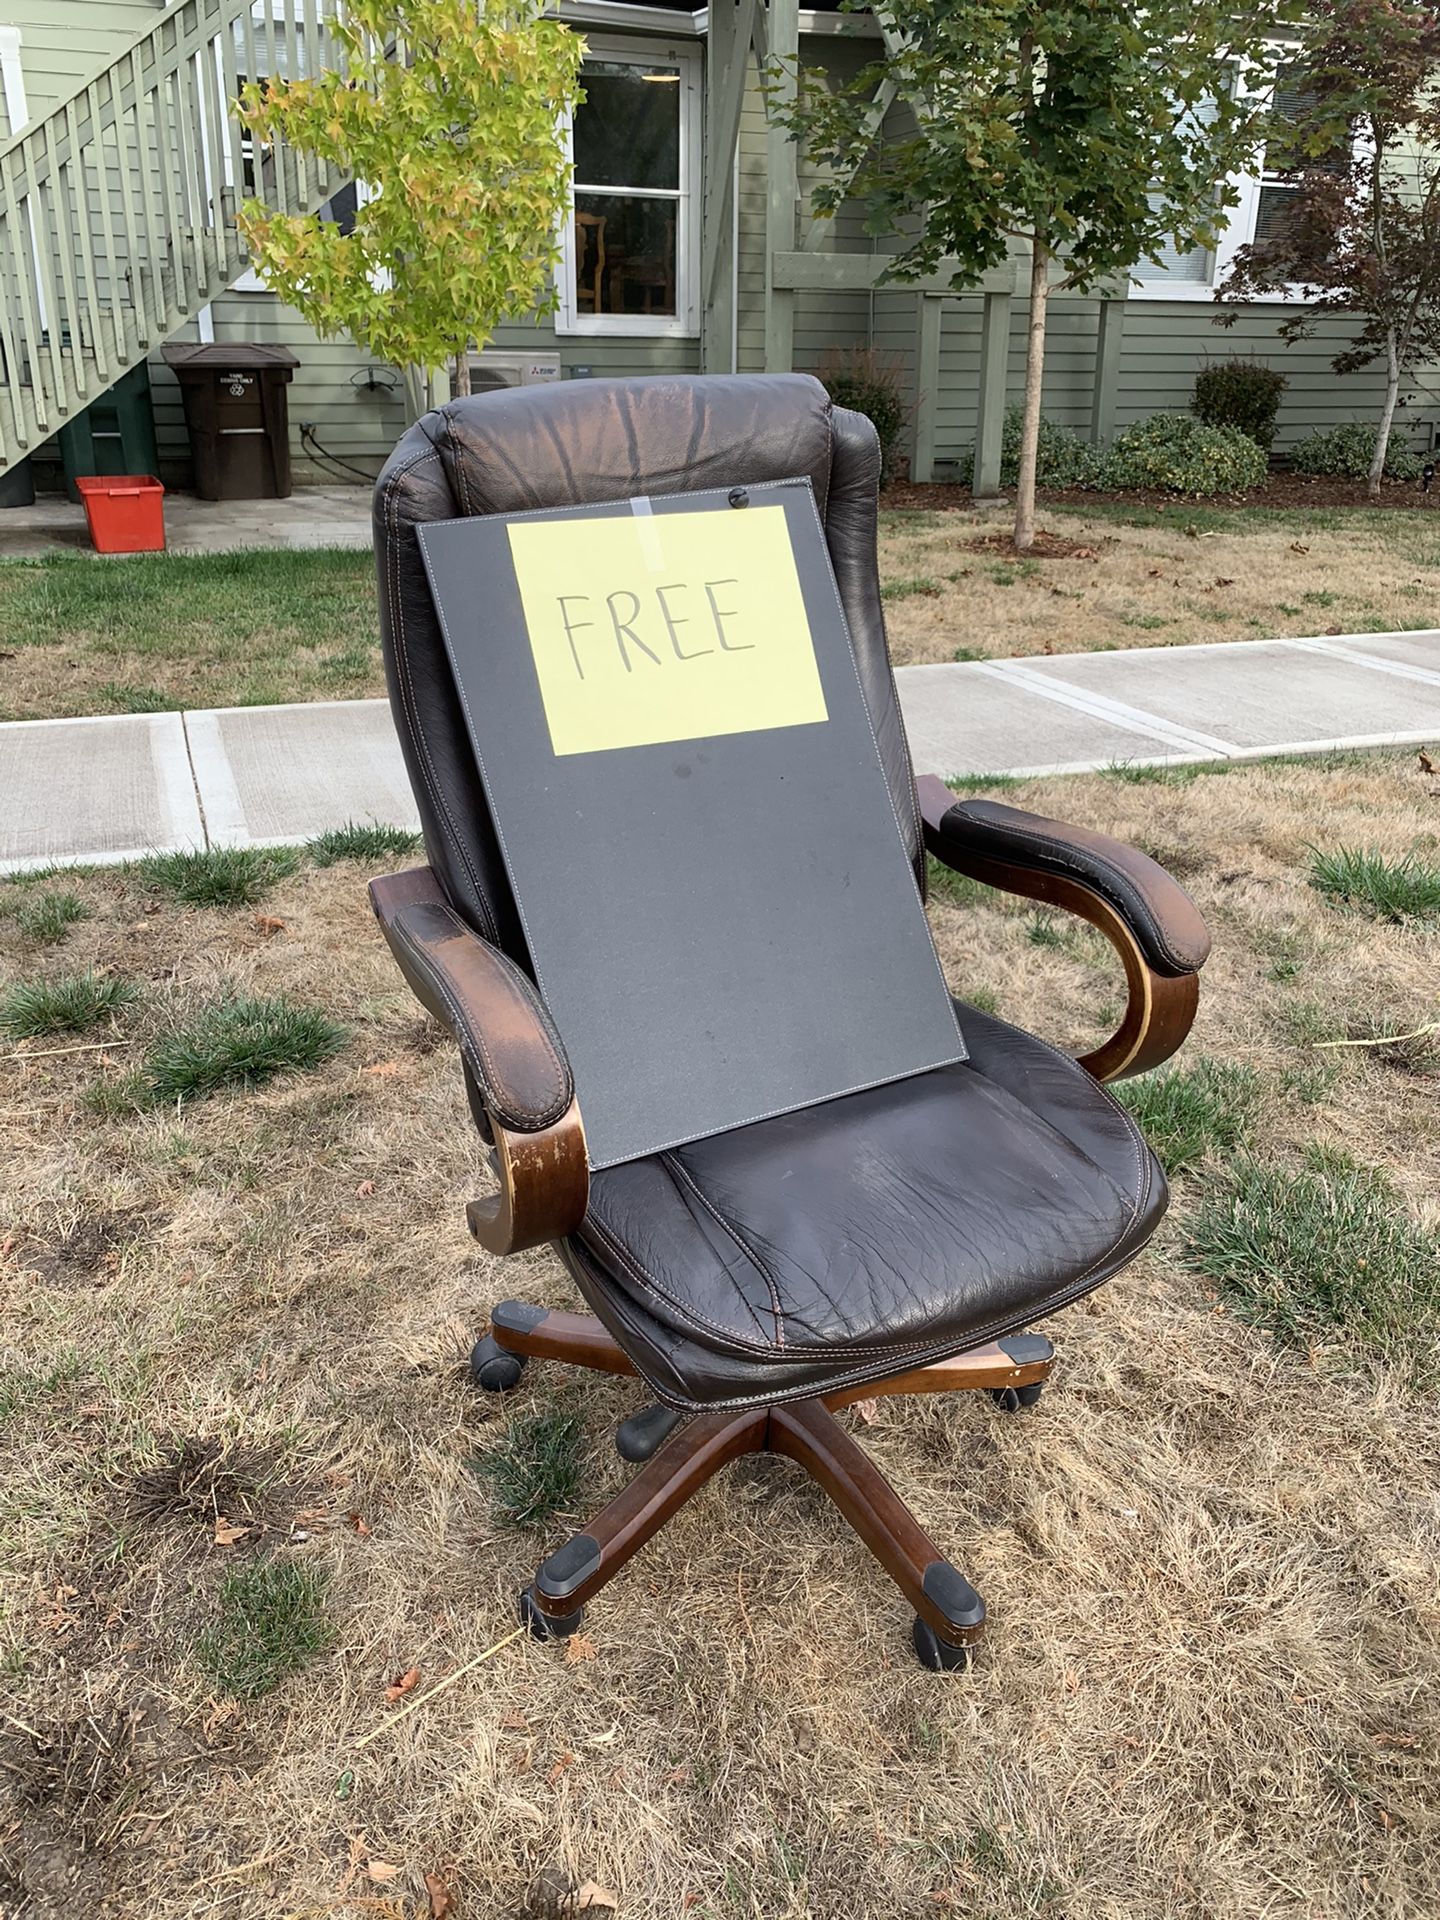 Free desk chair